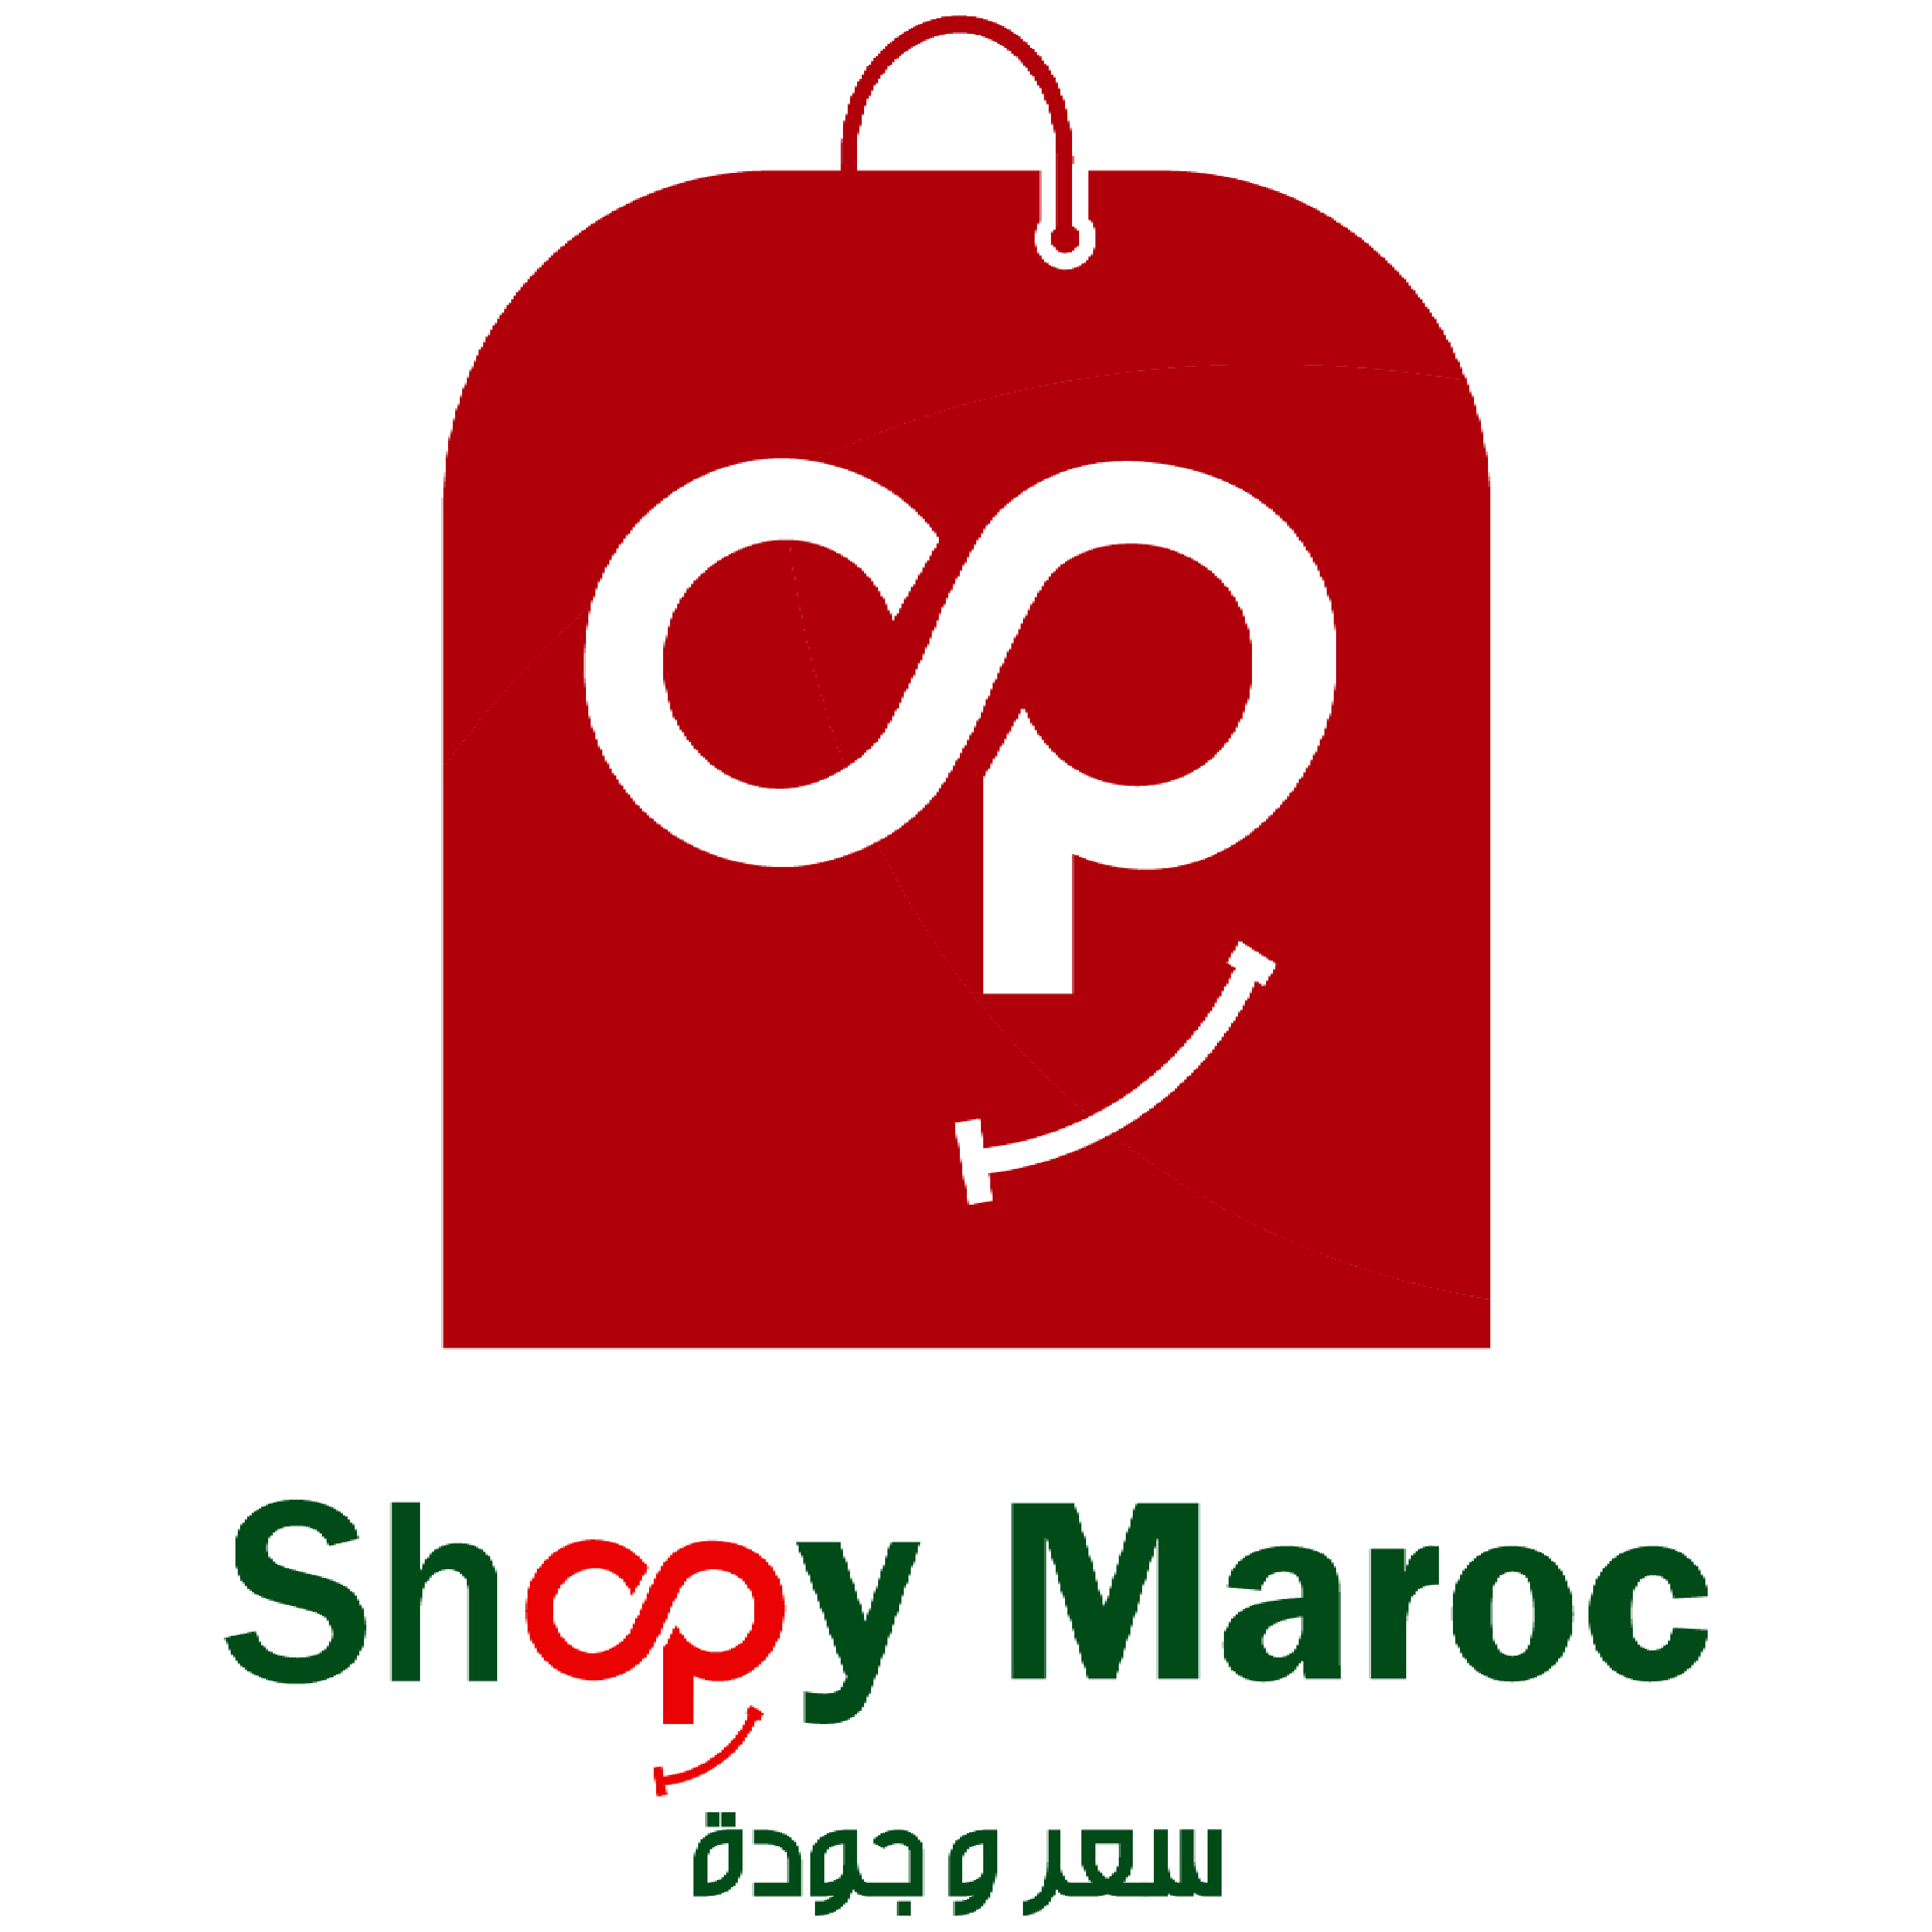 Shopy MAROC